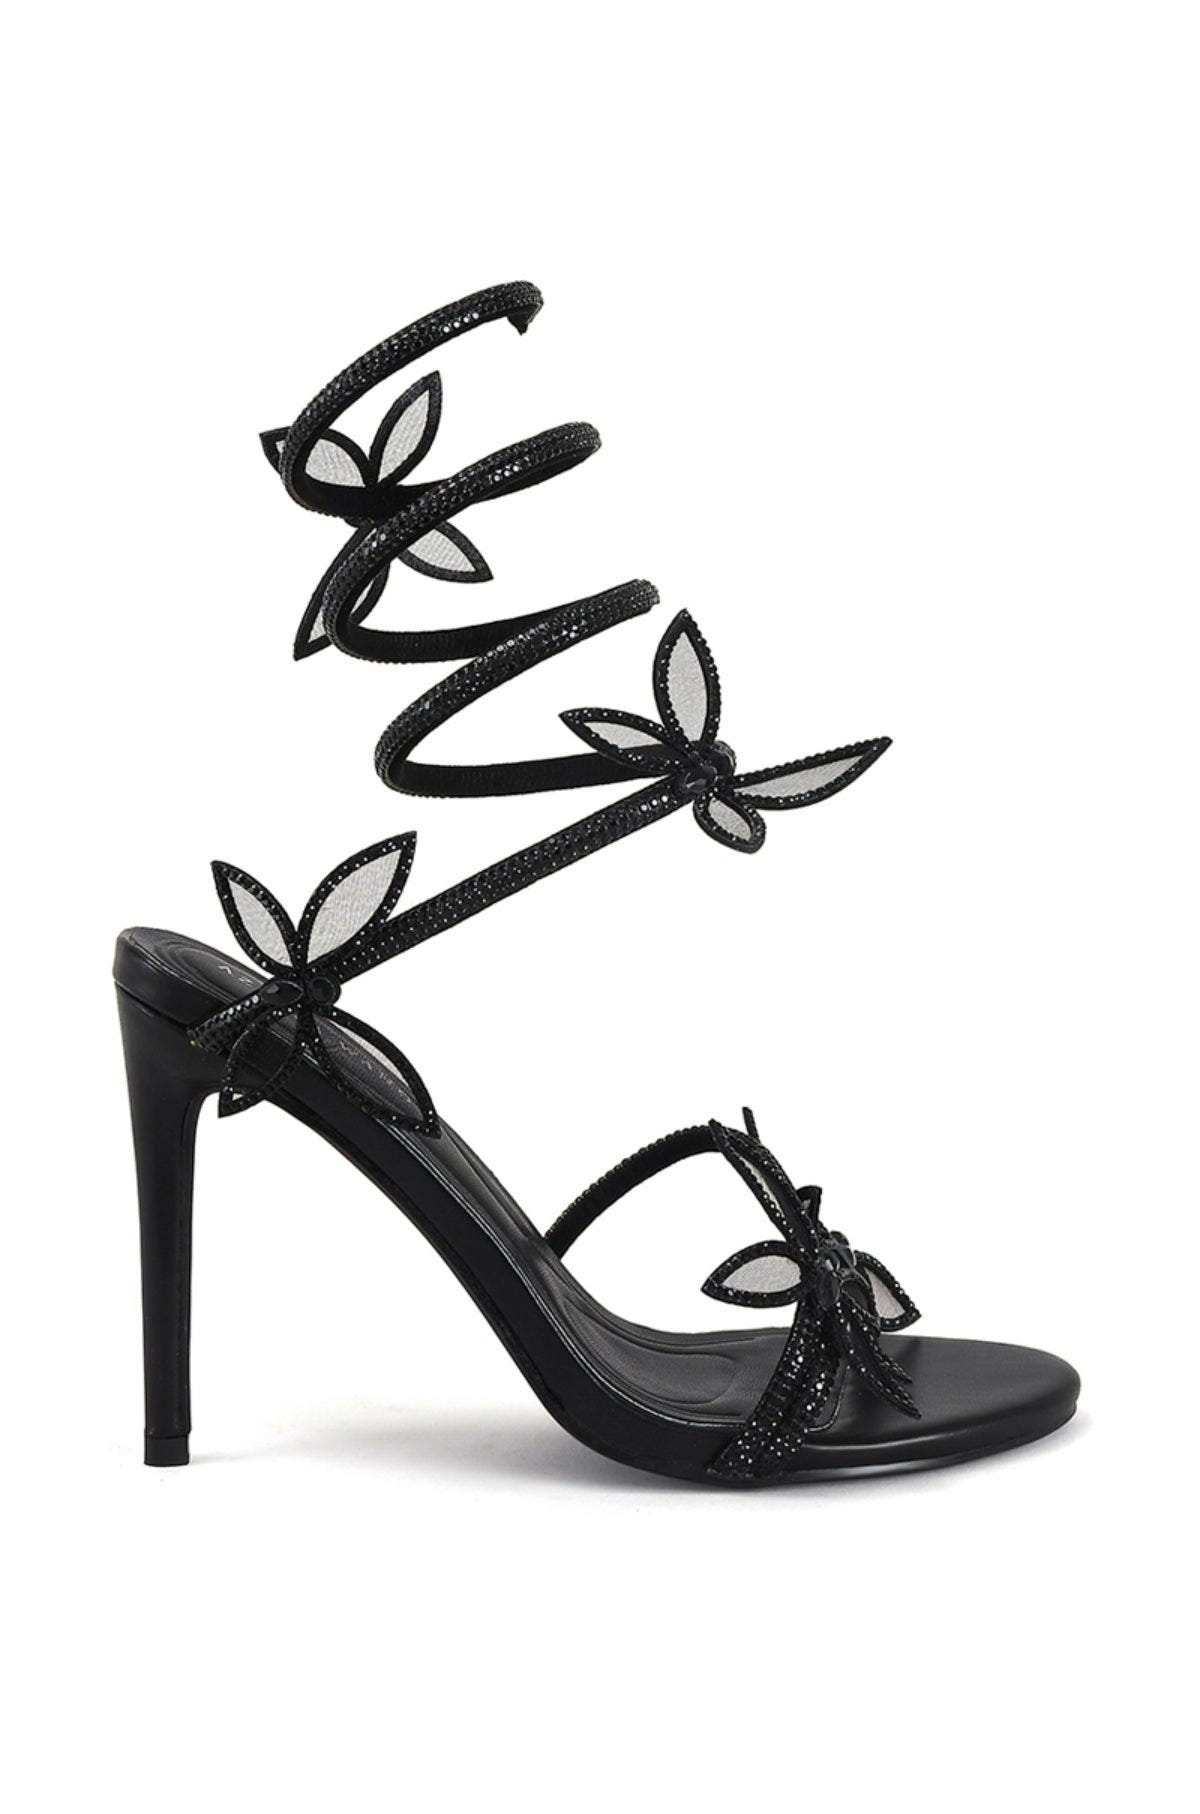 Rhinestone Ankle Wrap Dress Sandals by Azalea Wang - Strappy Sparkly Heels | Image